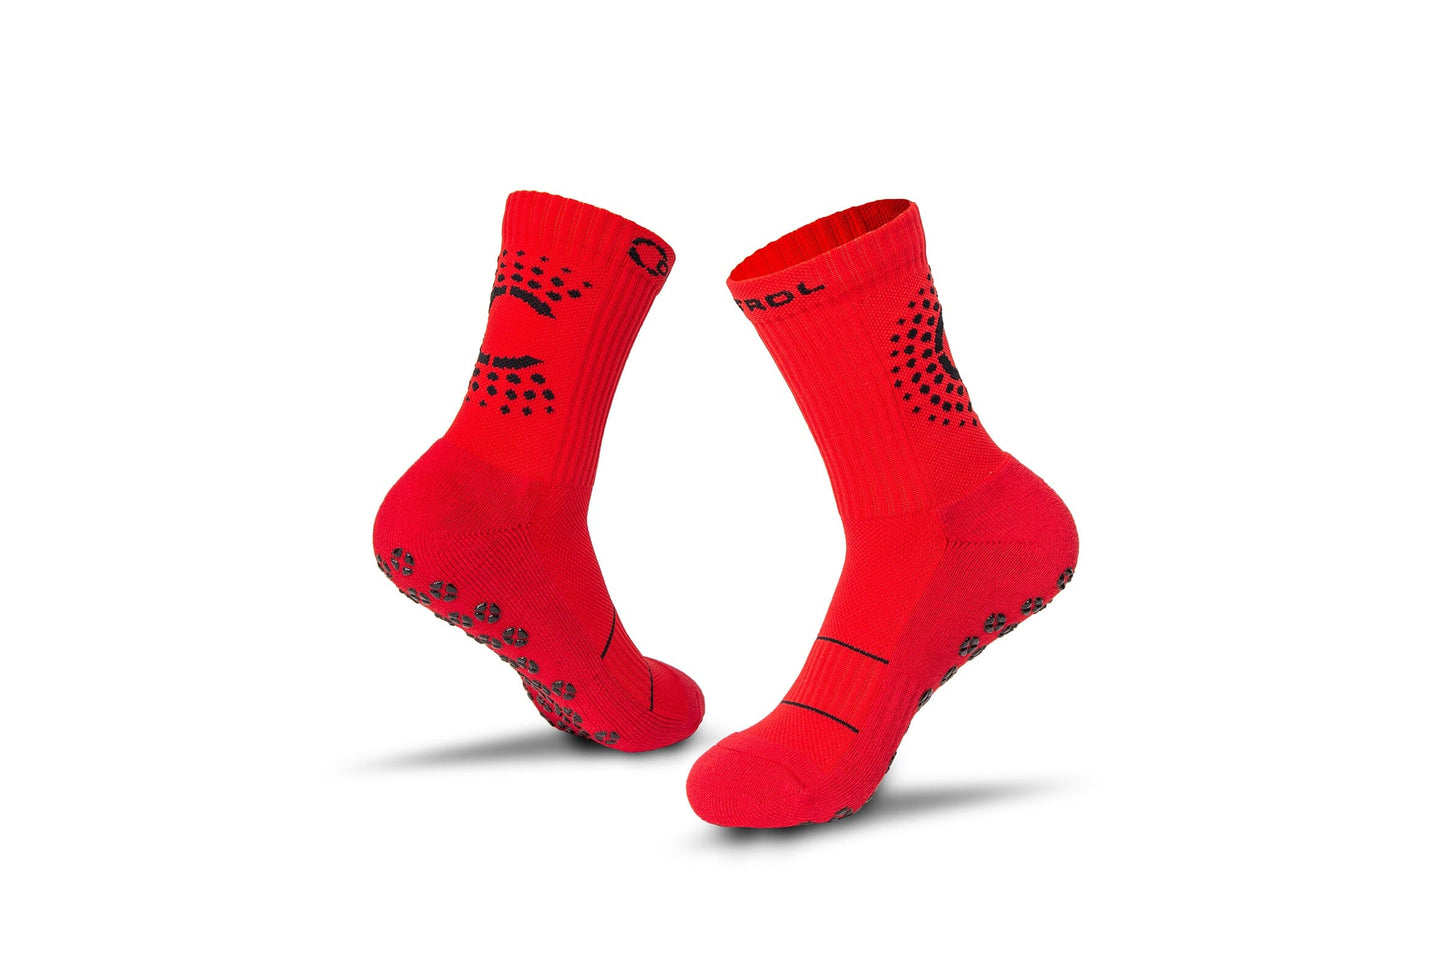 Control Sox 2.0 - Varsity Red Grip Socks Control Sox S/M (US 5-8.5) 